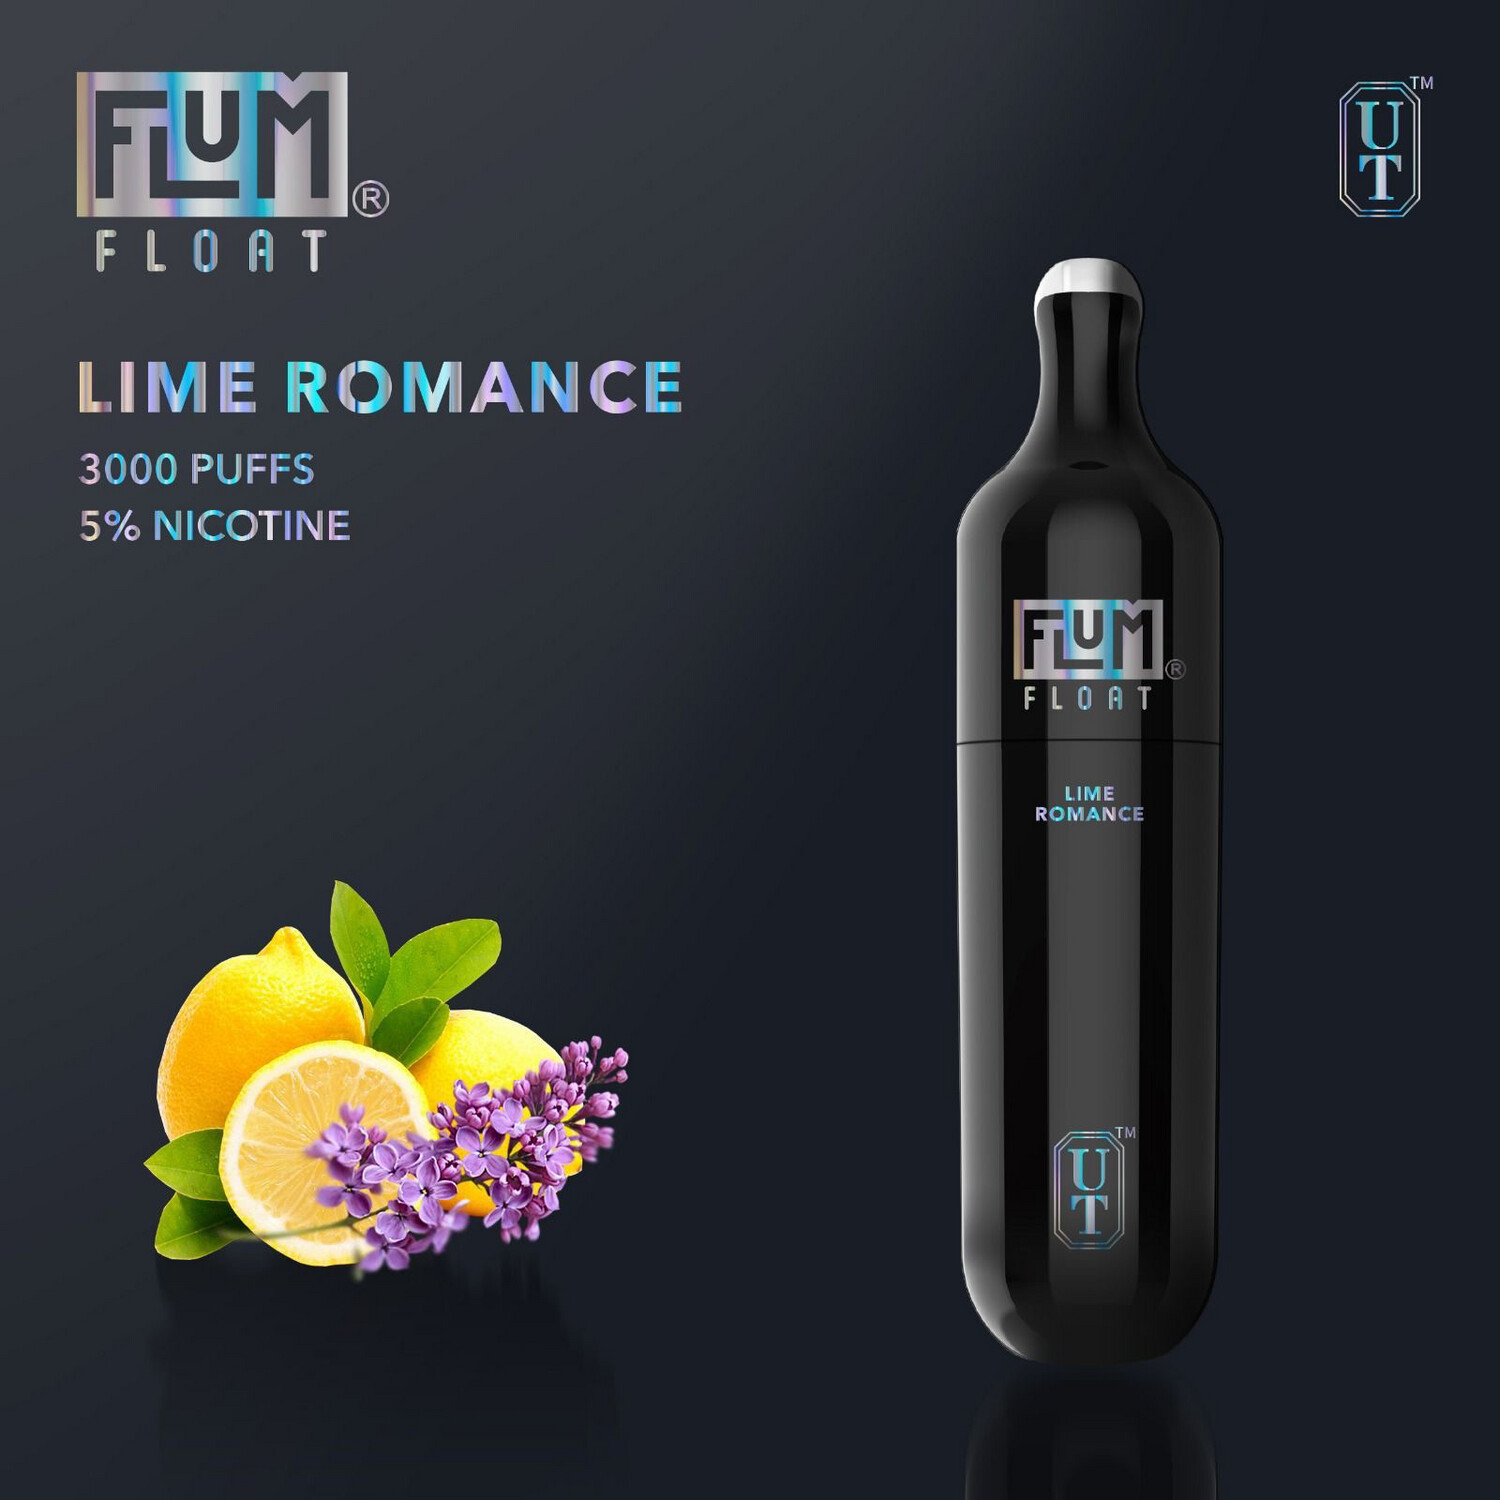 Flum 5% Lime Romance